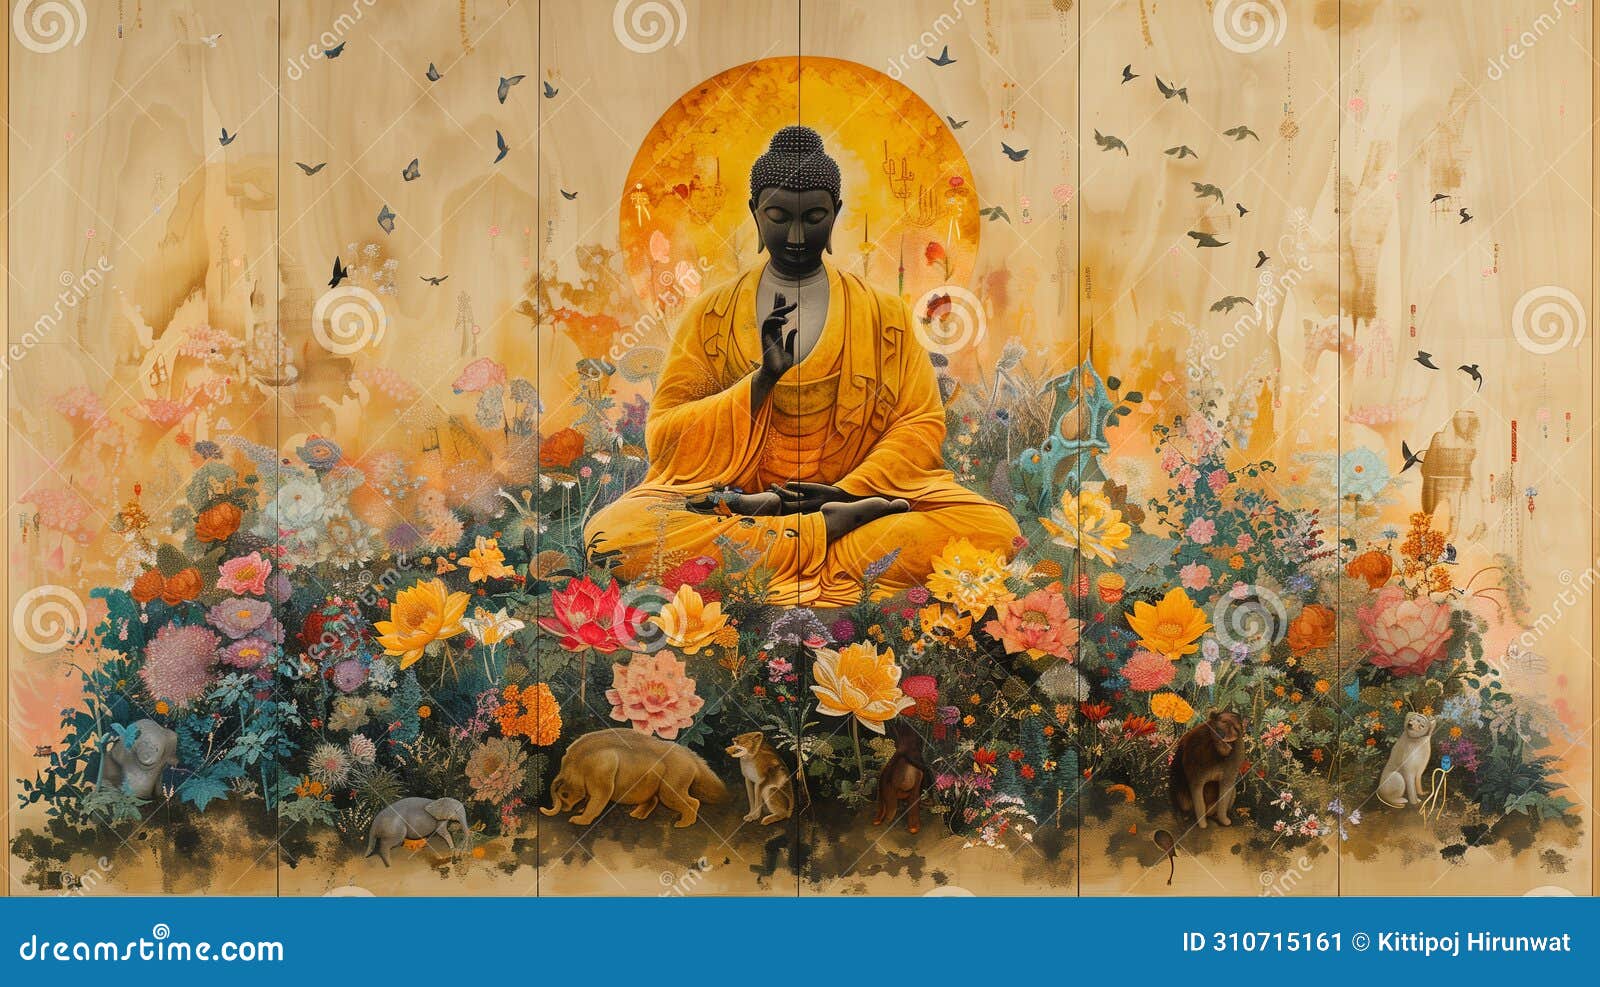 serene depiction of buddha's birth